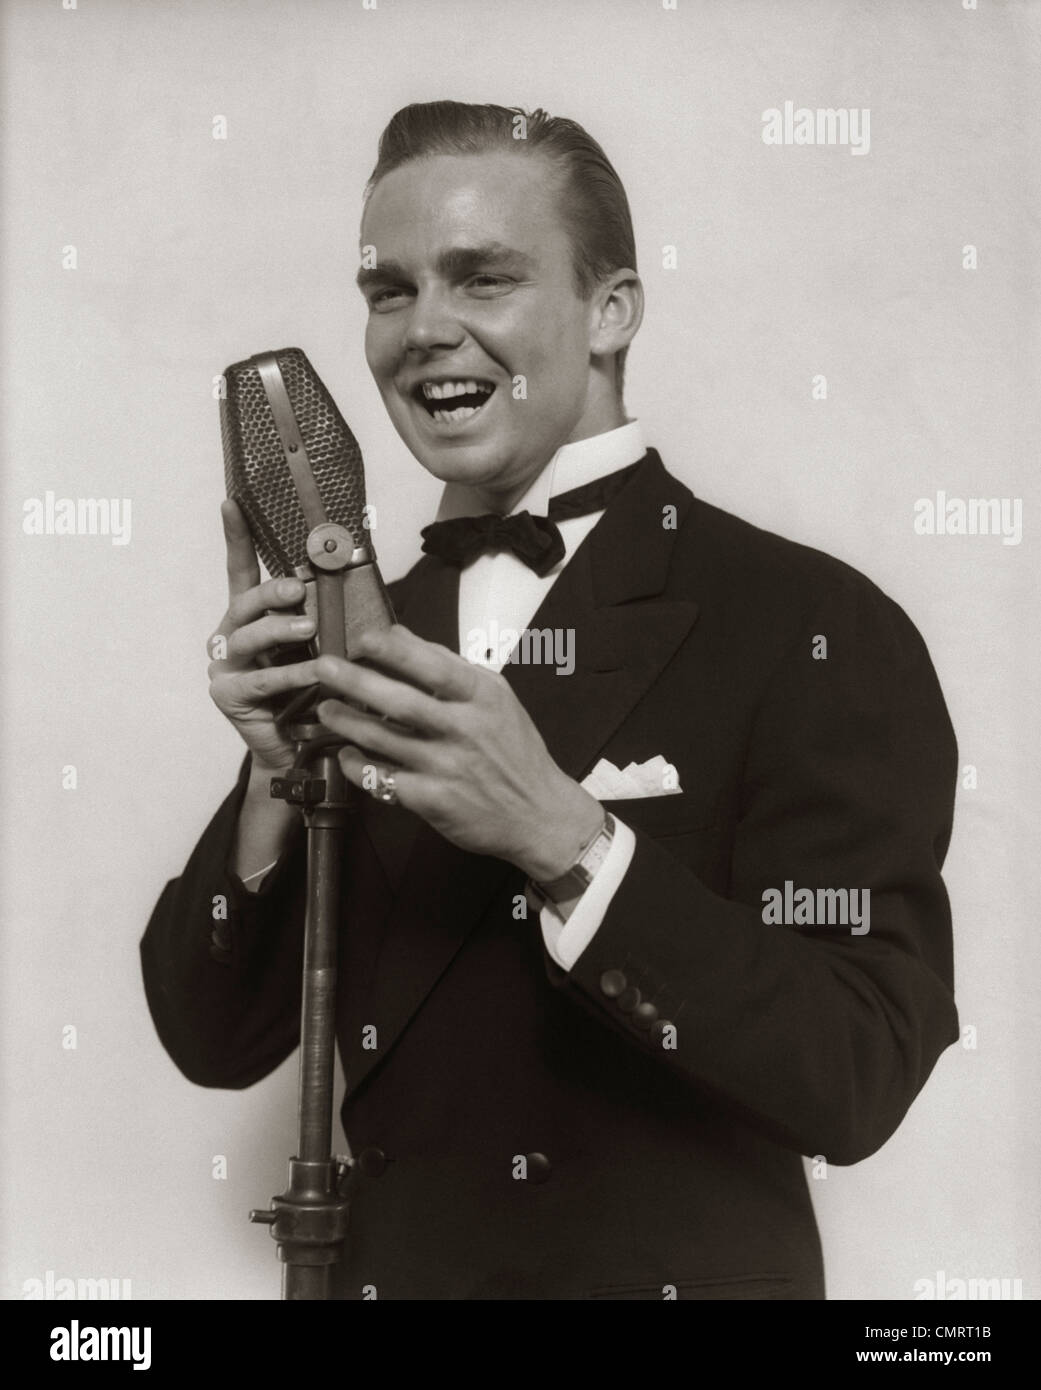 1920s 1930s SMILING MAN RADIO SINGER ENTERTAINER CROONER IN TUXEDO SINGING INTO MICROPHONE Stock Photo